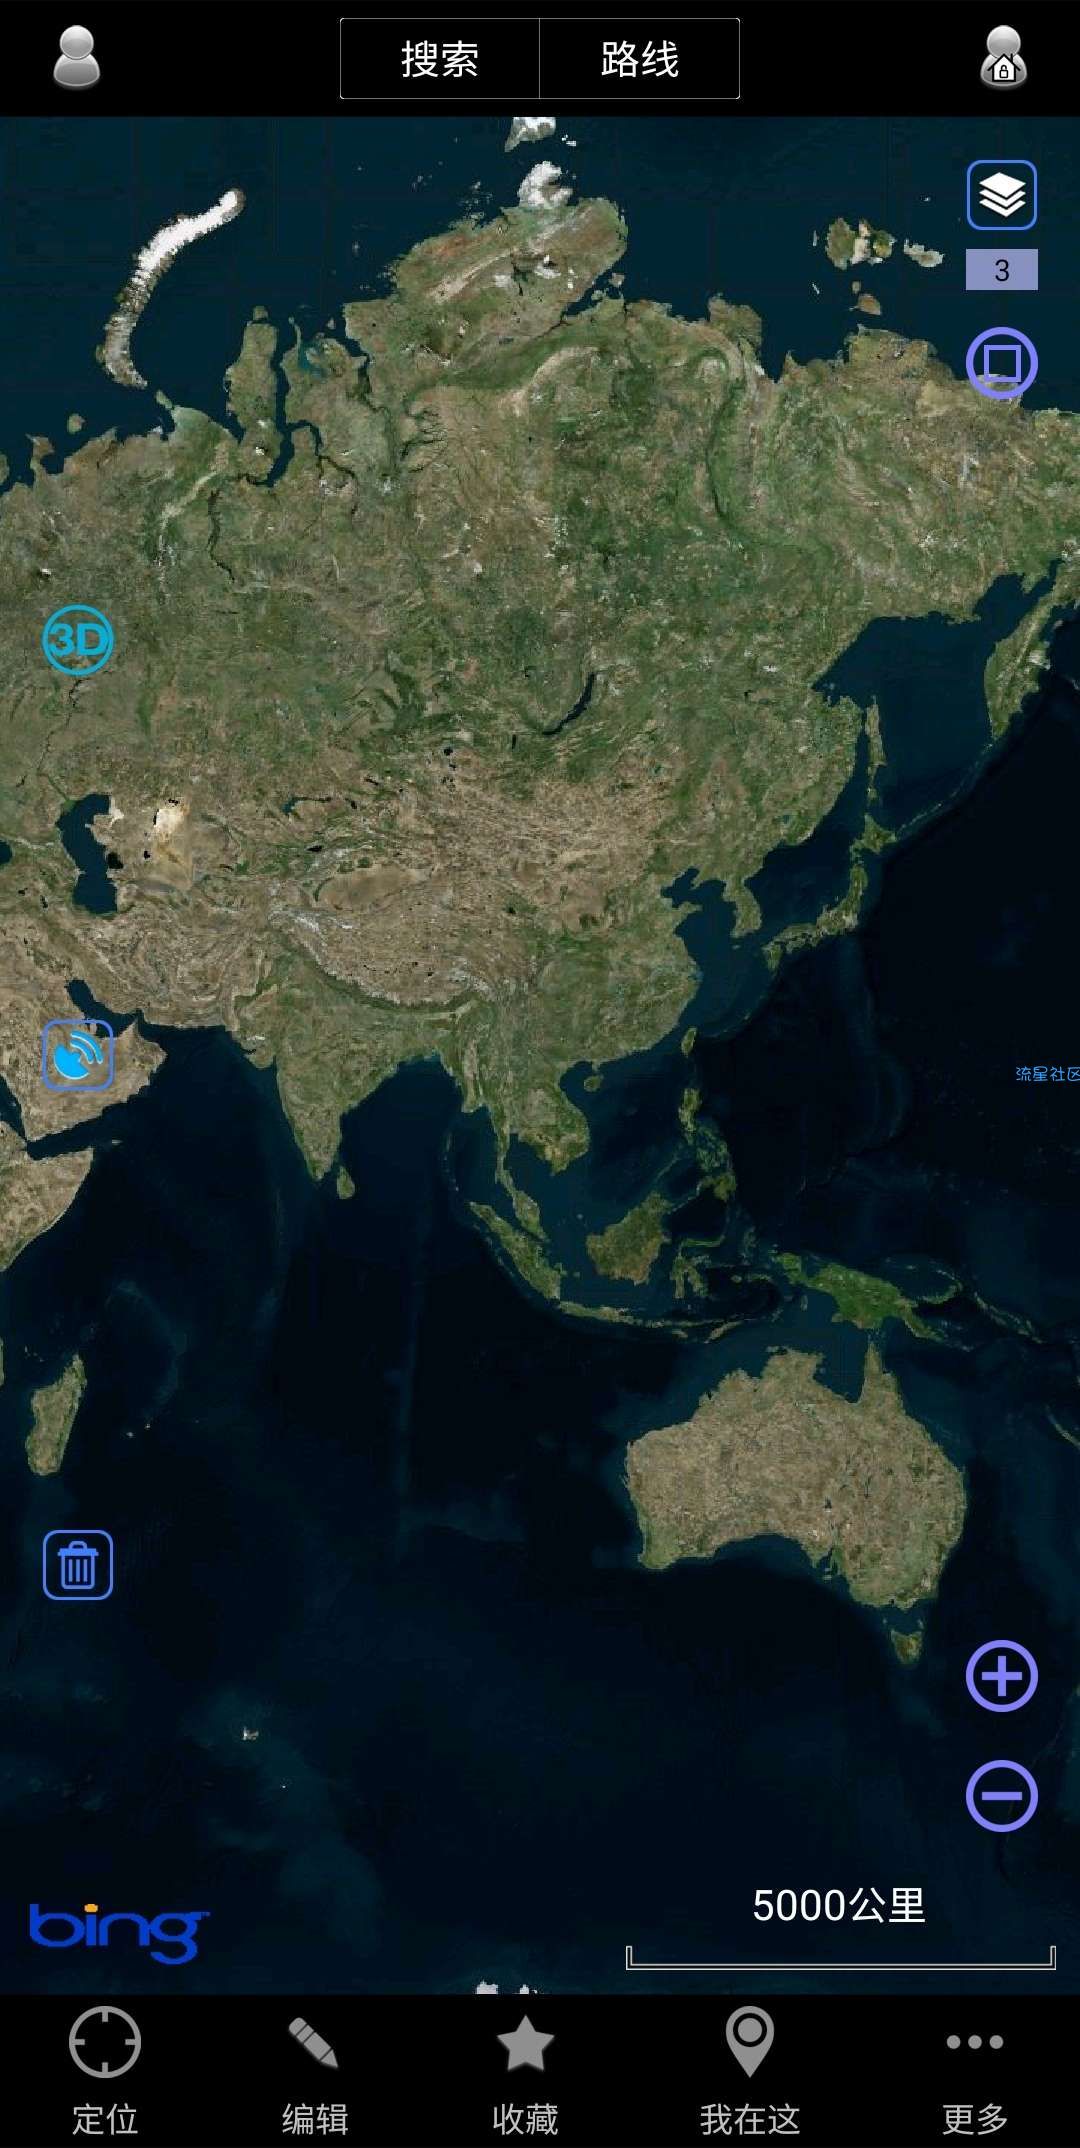 bing卫星地图图片